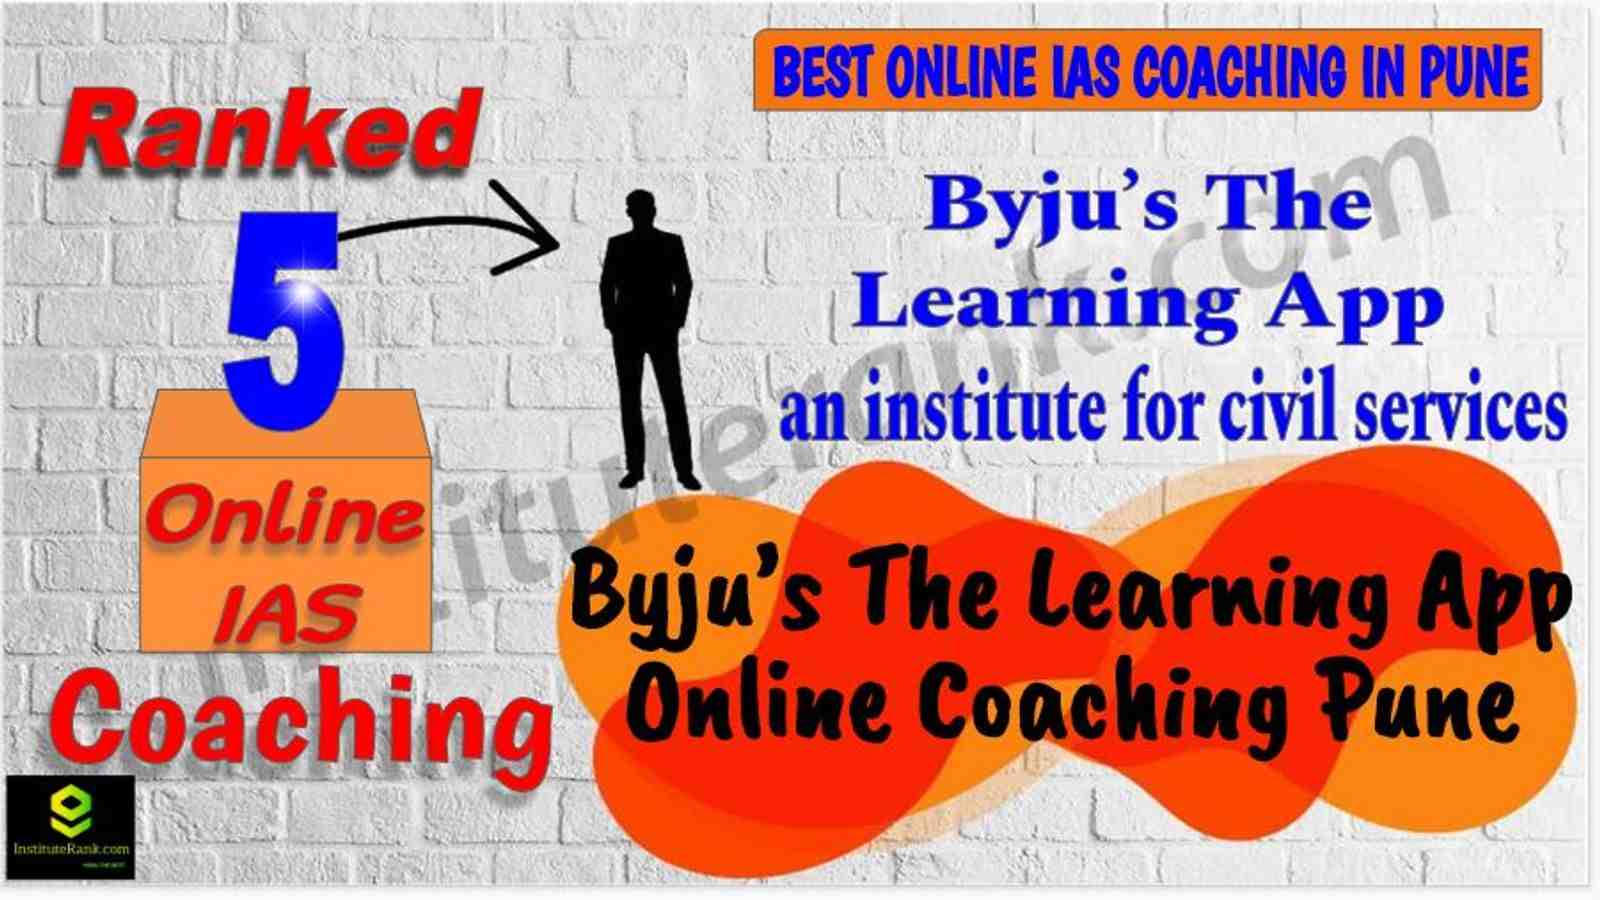 Best Online IAS Coaching in Pune